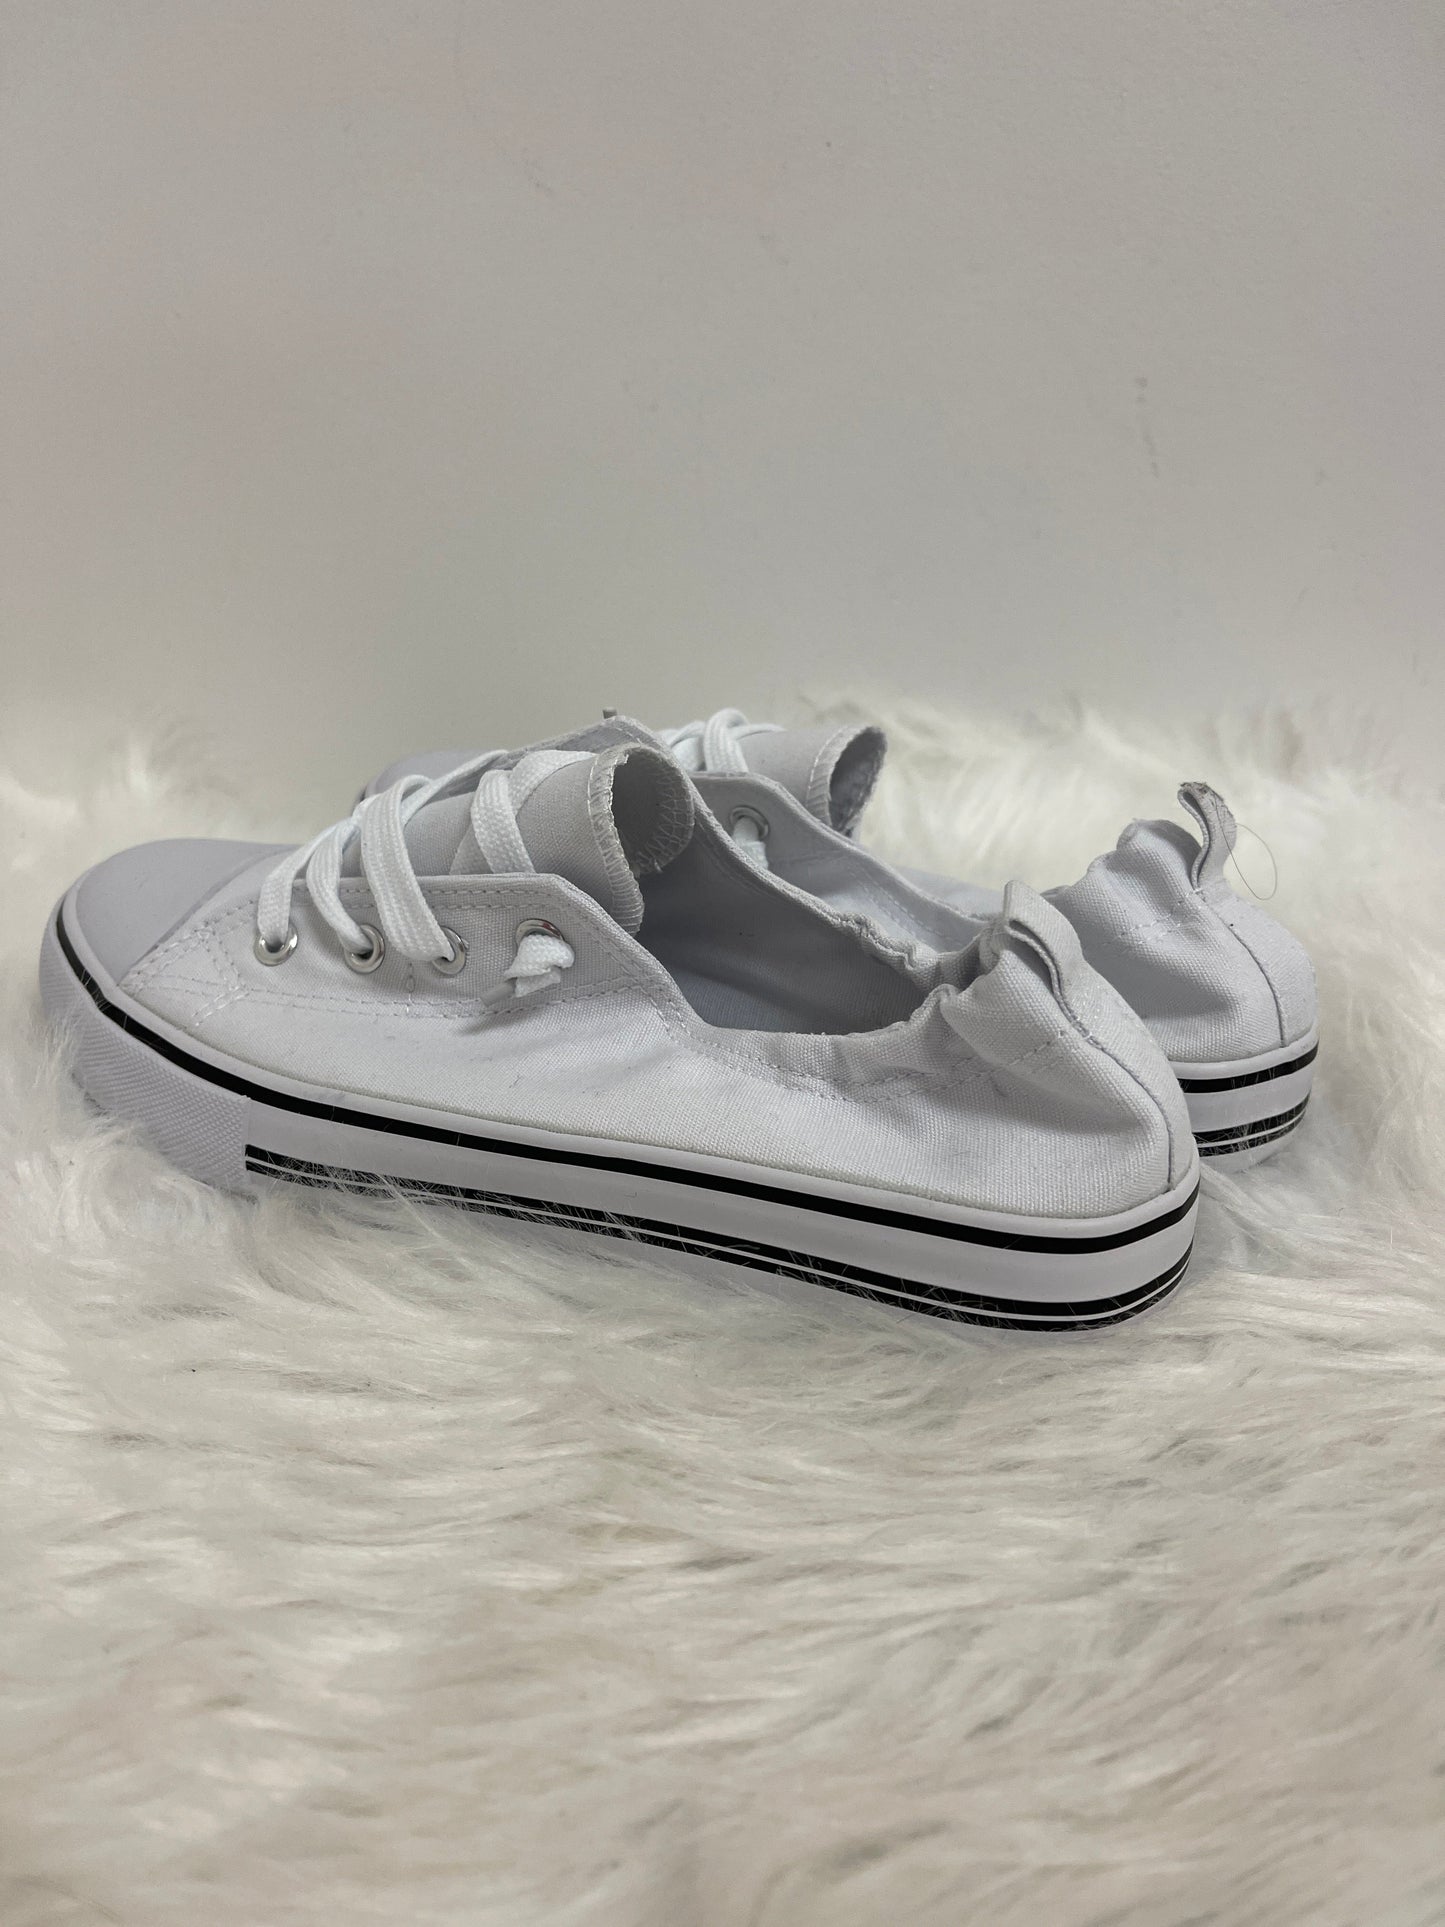 White Shoes Sneakers Pierre Dumas, Size 8